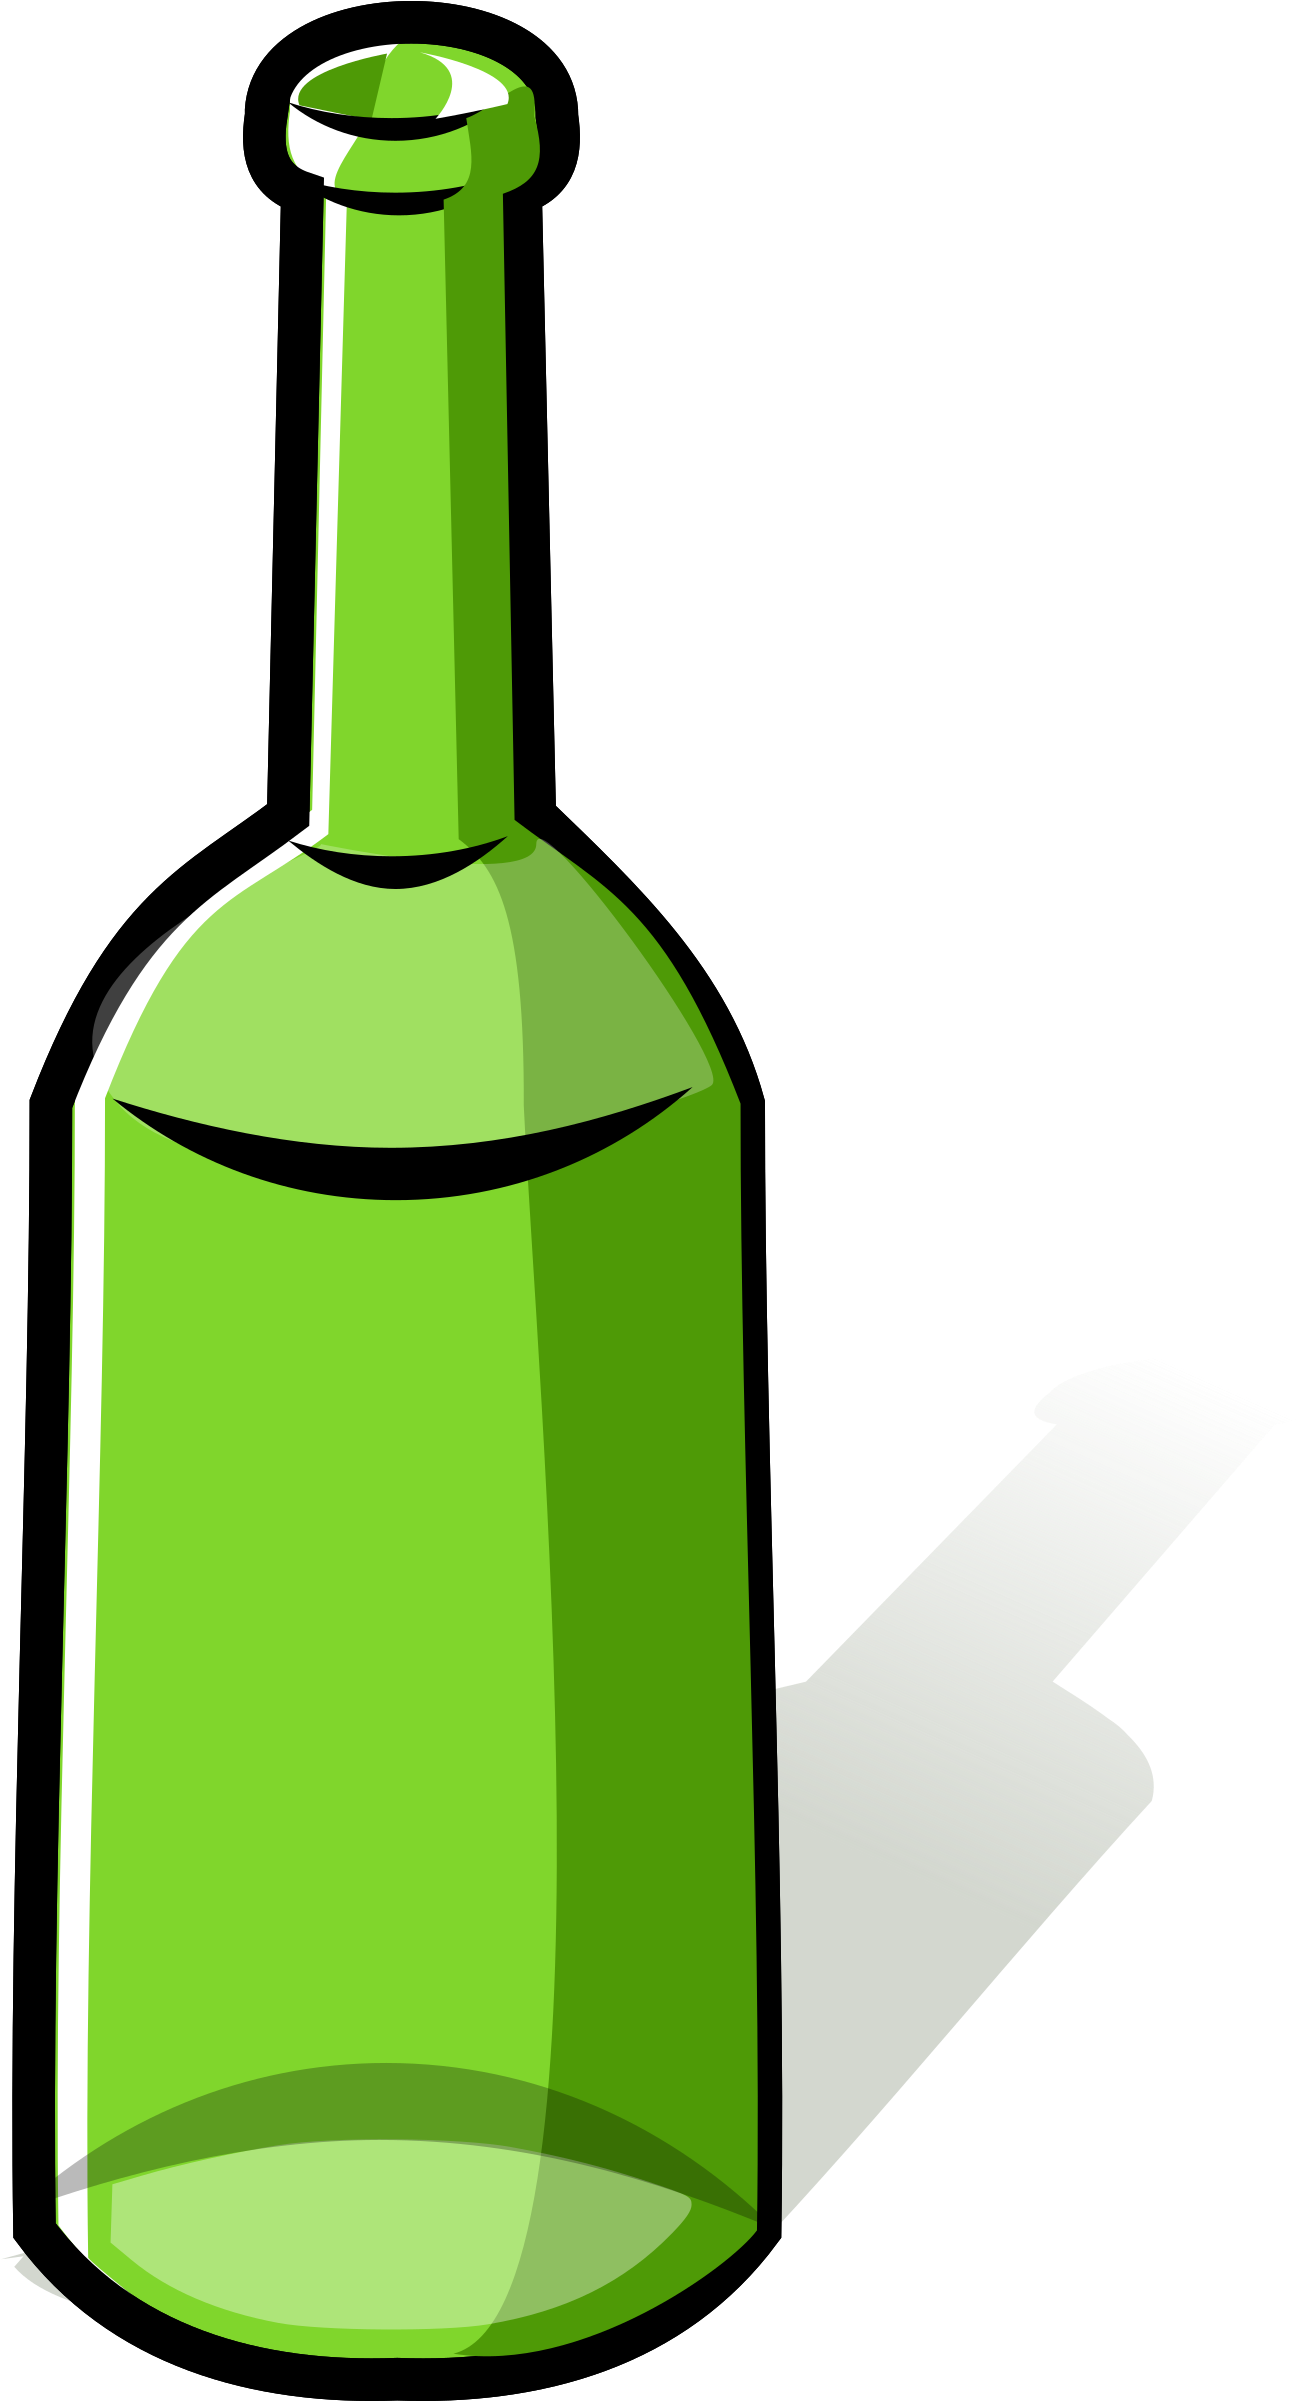 White Wine Glass Bottle Clip Art - White Wine Glass Bottle Clip Art (1345x2400)